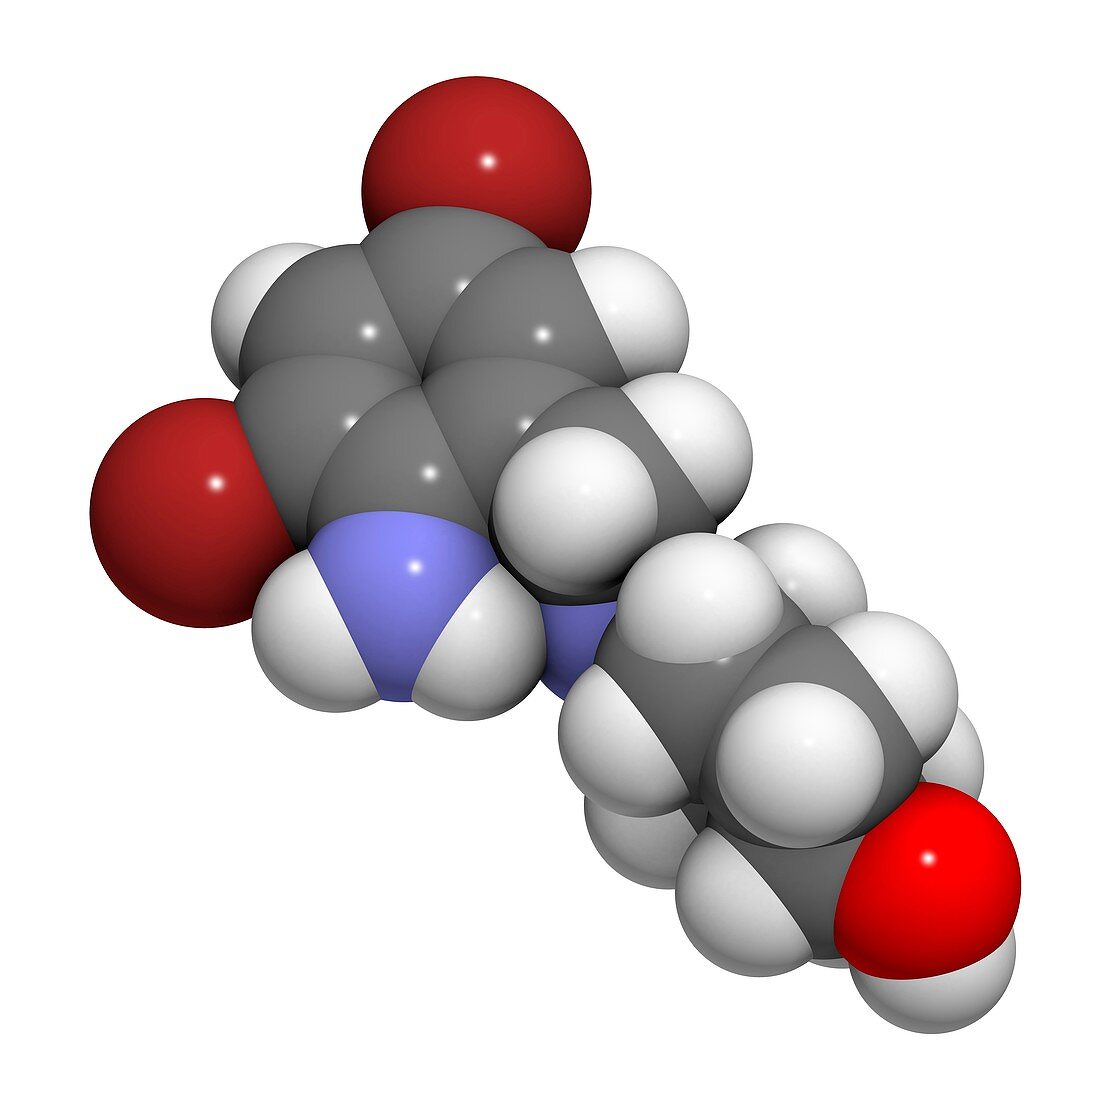 Ambroxol secretolytic drug molecule